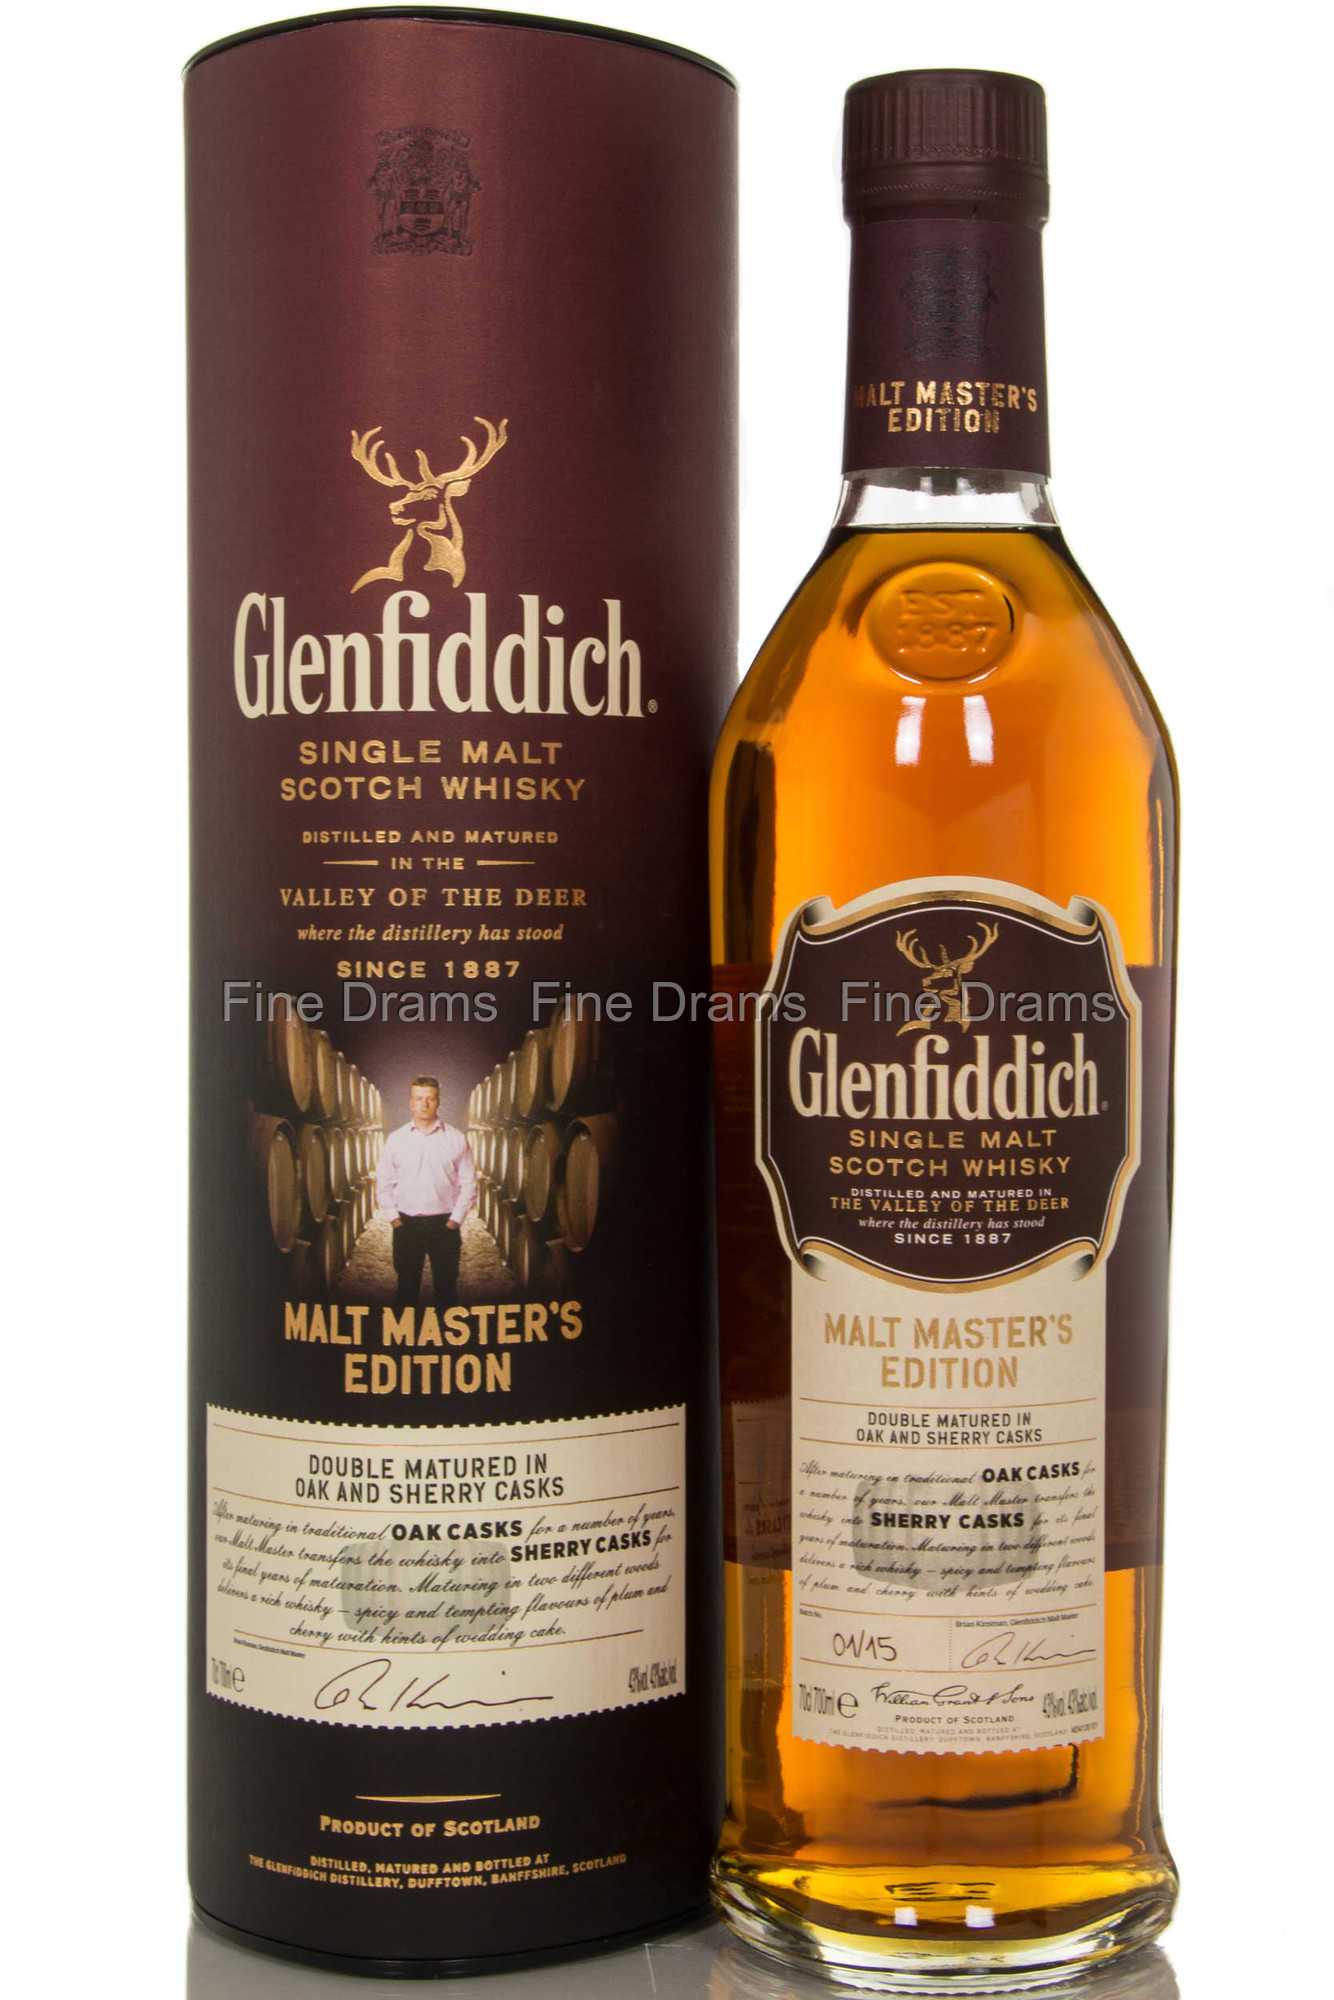 Glenfiddich Our Malt Master's Edition Scotch Single Malt Whisky